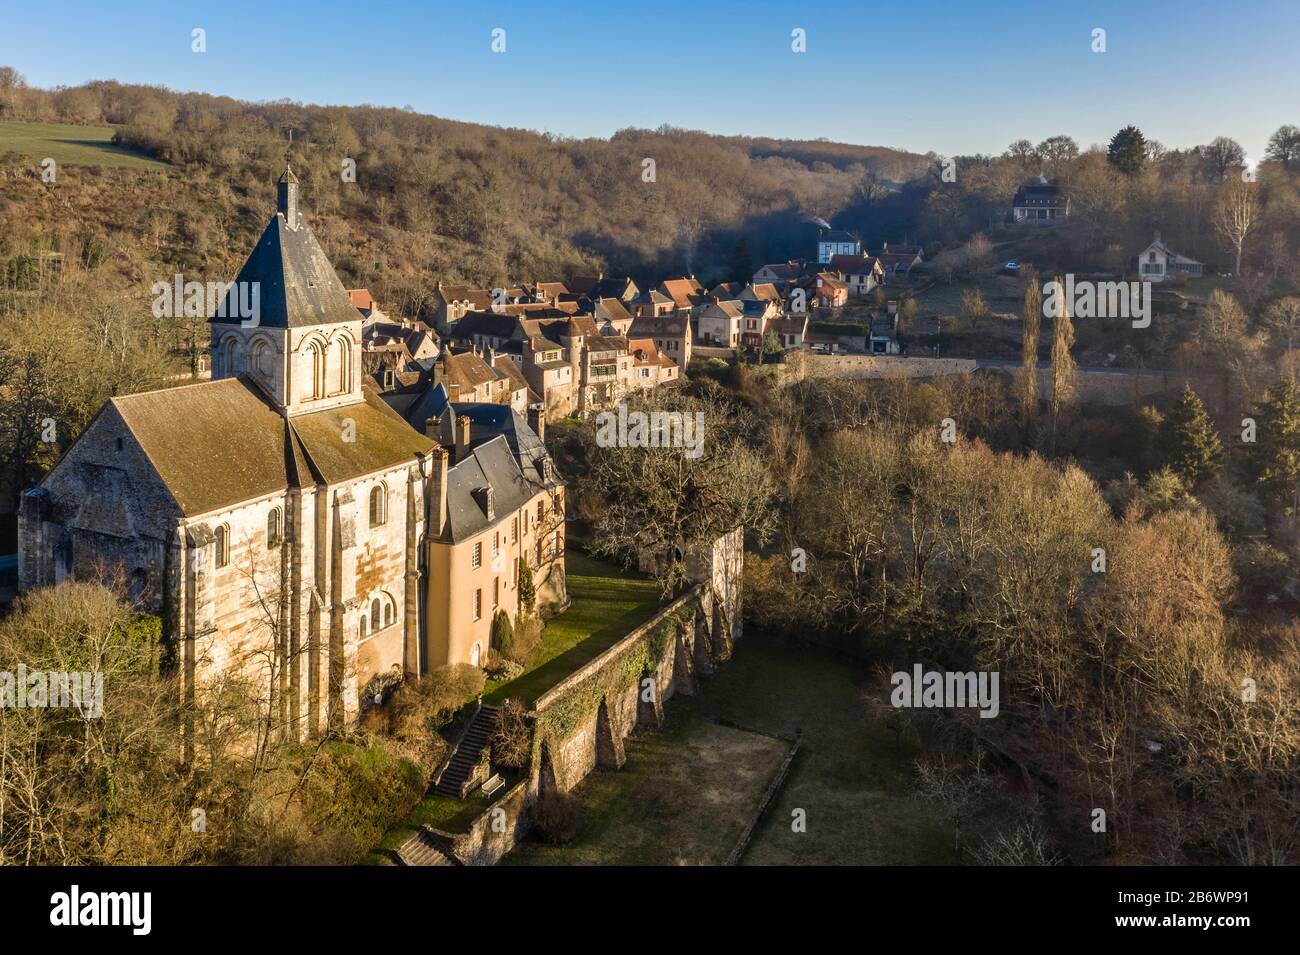 France, Indre, Berry, Creuse valley, Gargilesse Dampierre, labelled Les Plus Beaux Villages de France (The Most Beautiful Villages of France), general Stock Photo